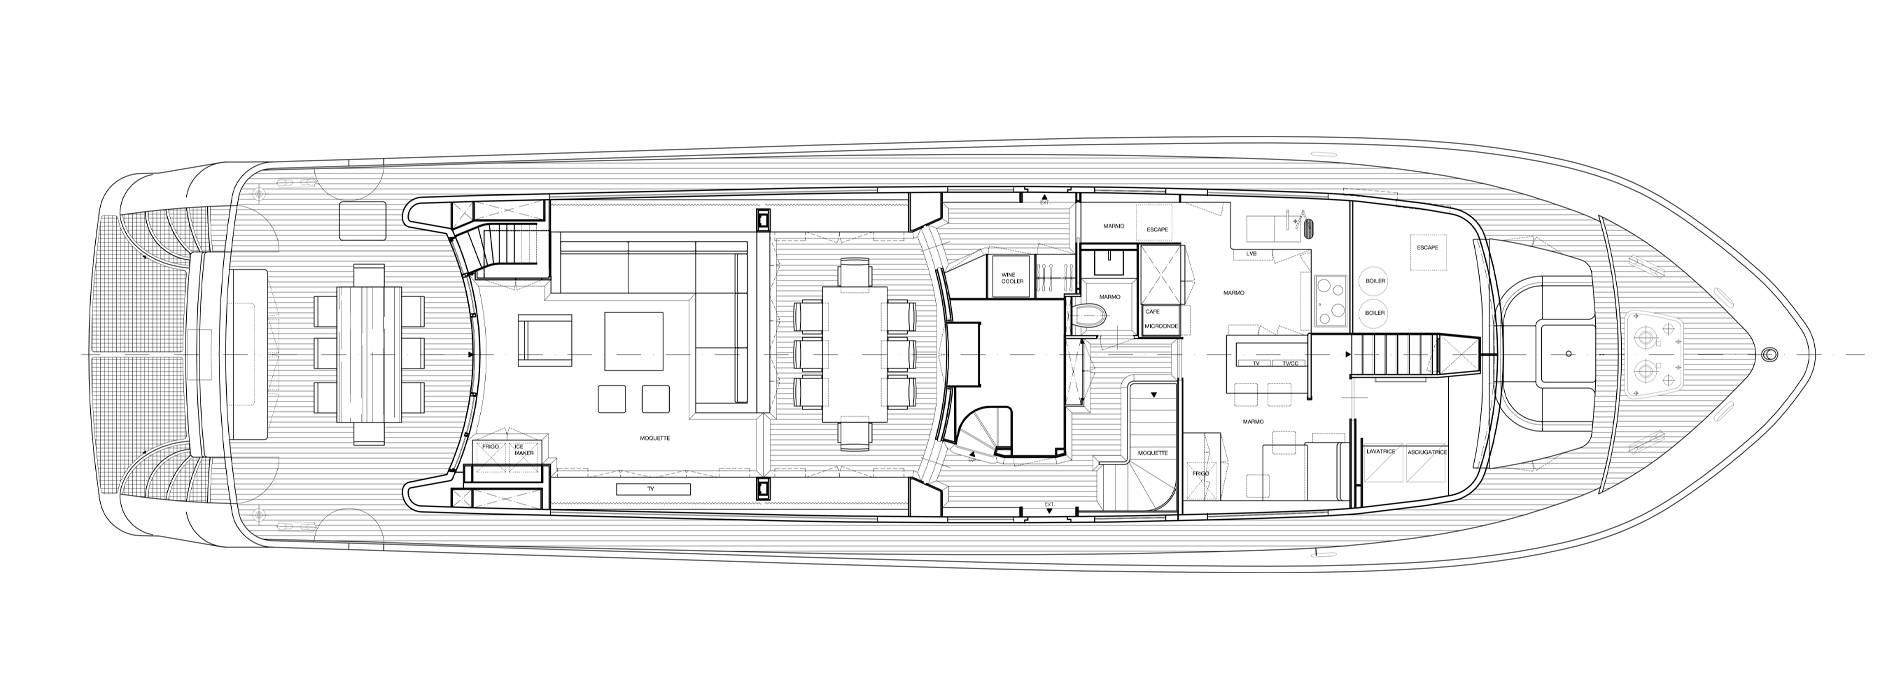 Sanlorenzo Yachts SL88-541 Main deck